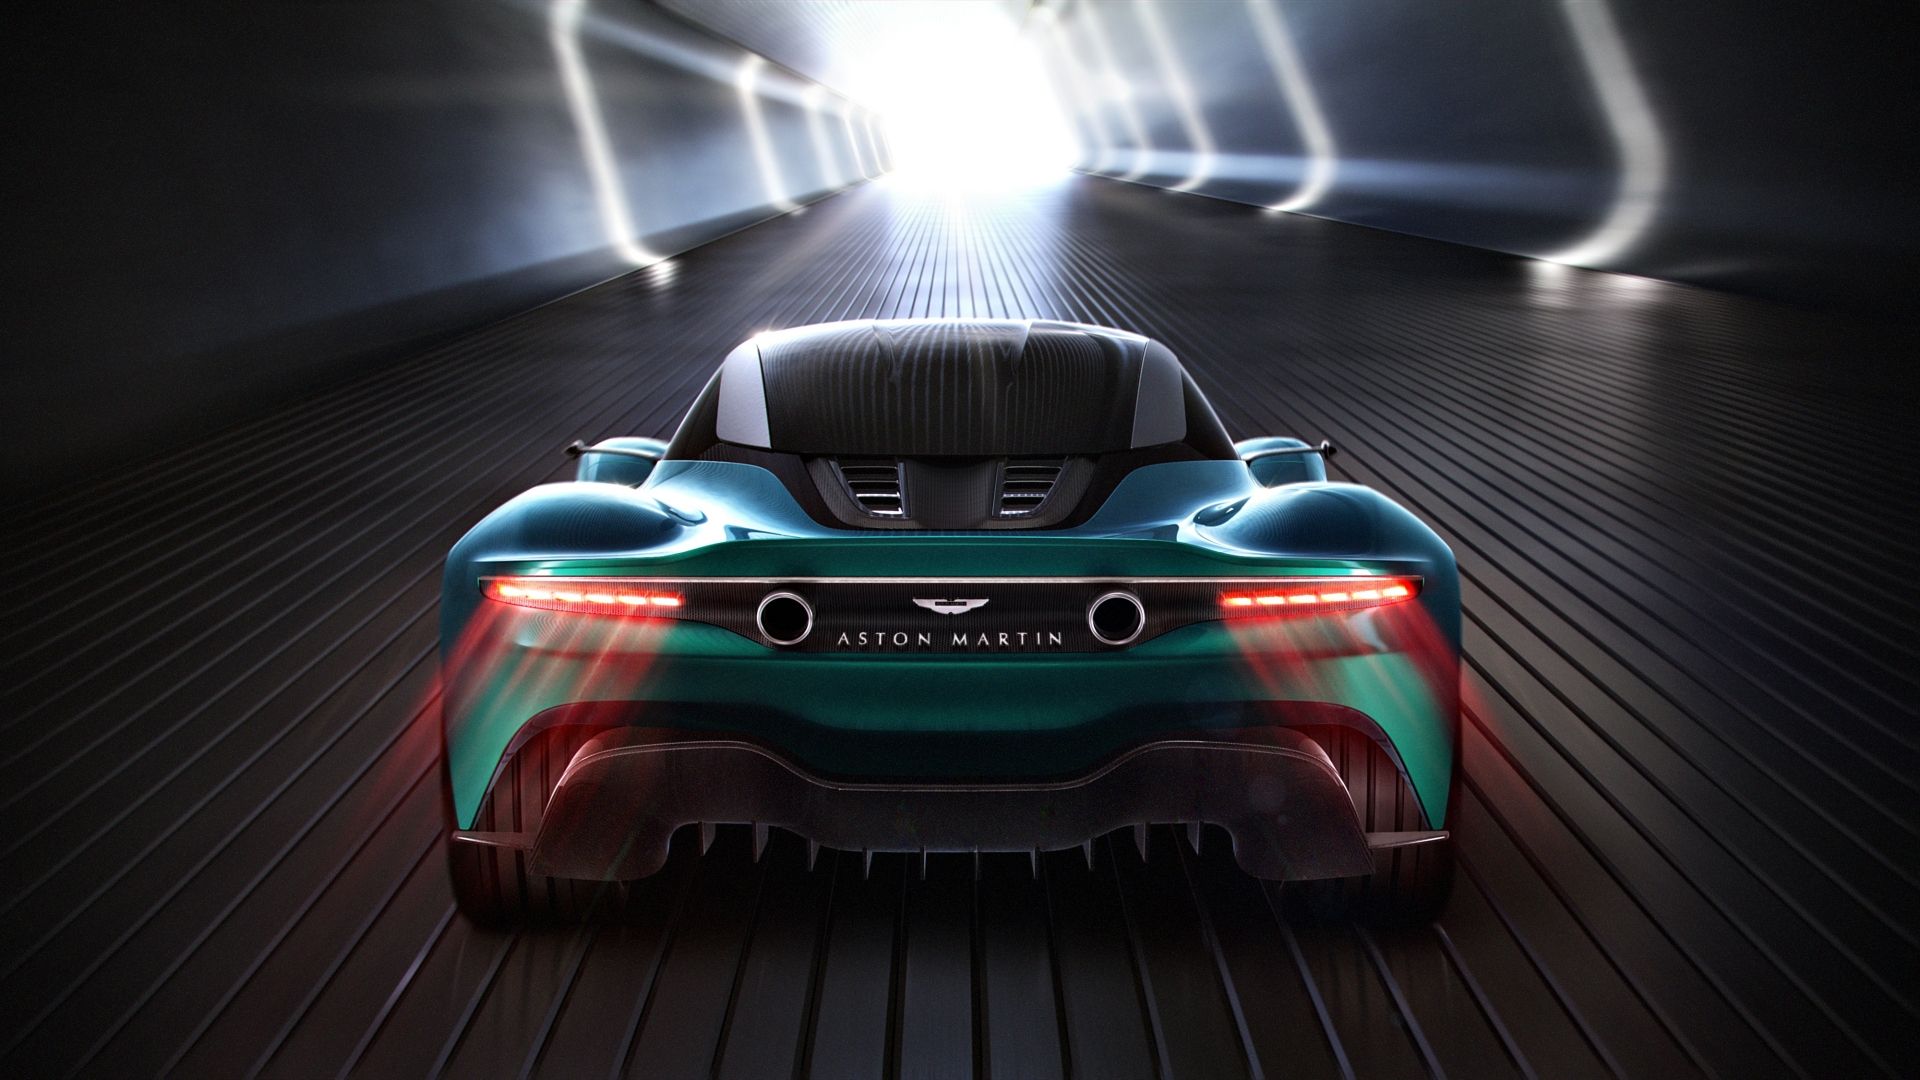 Green Aston Martin Vanquish Vision Concept